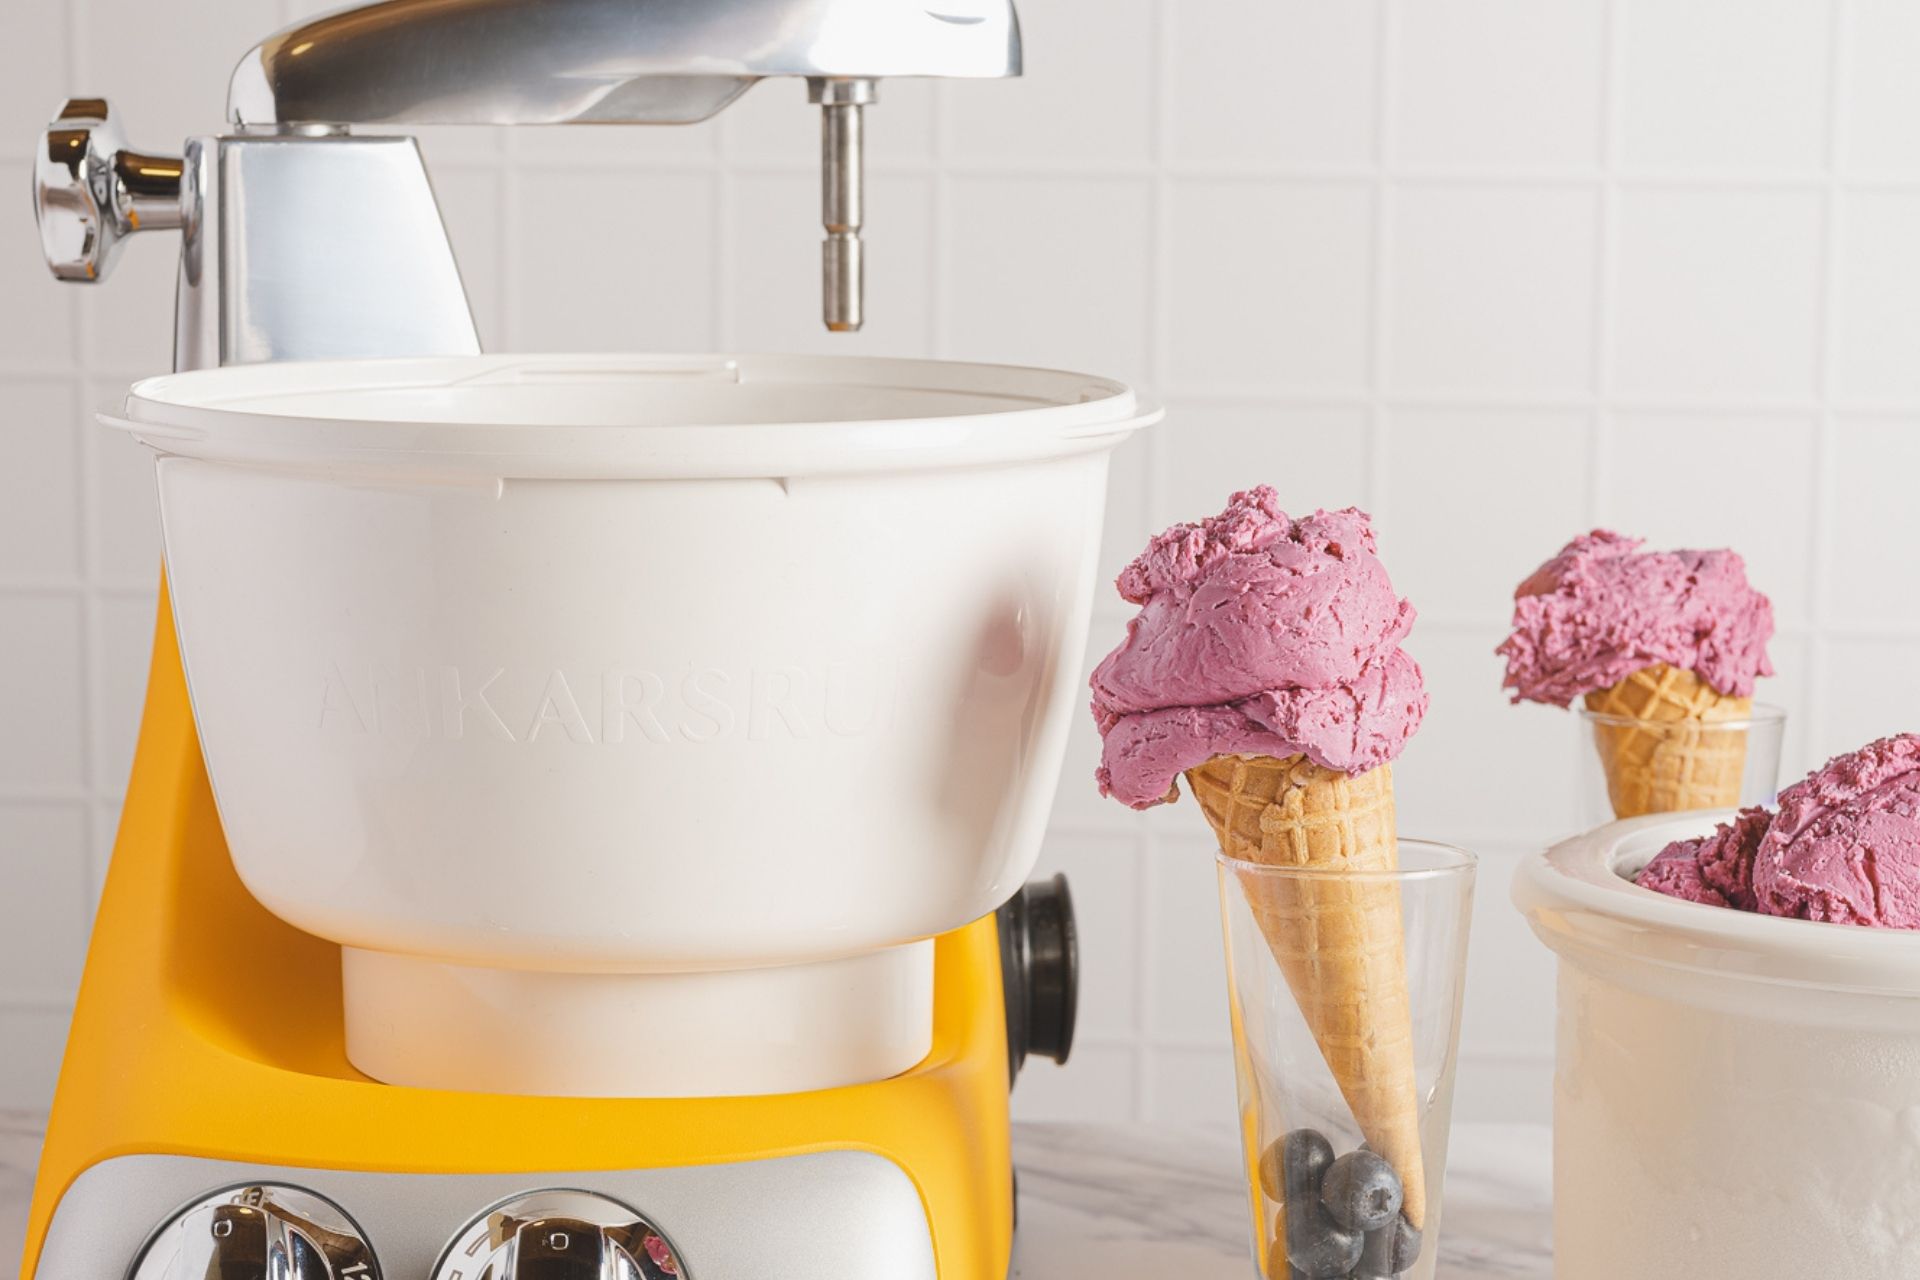 Ice Cream maker - Ankarsrum United States